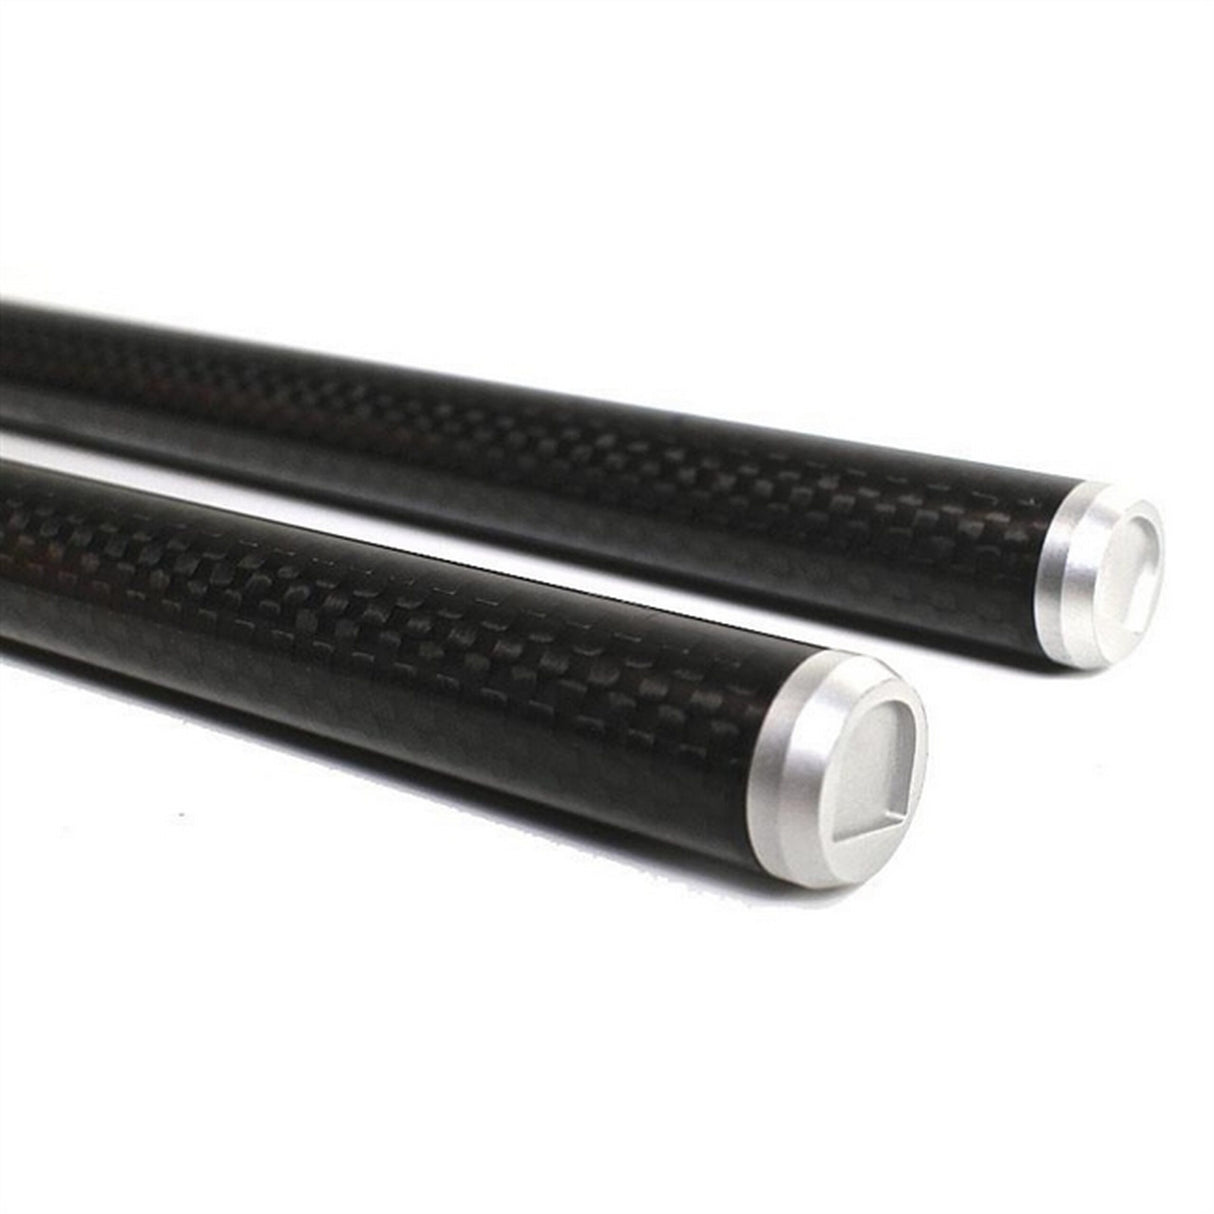 Genustech G-DCFR350 Deluxe Carbon Fiber Rods, 350mm, Pair